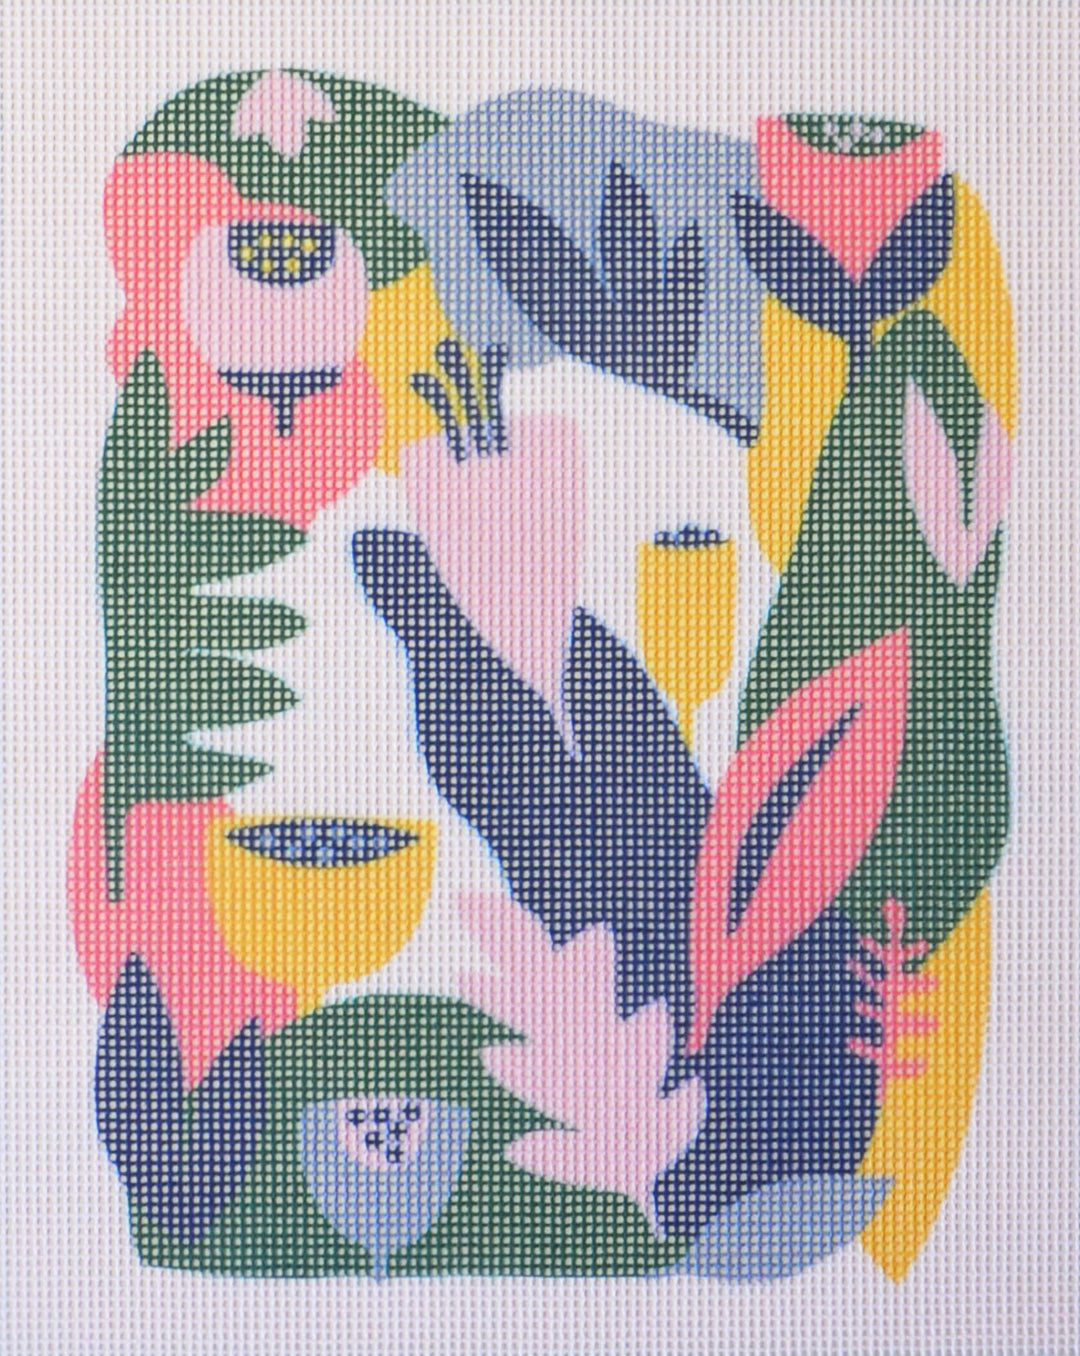 Blush Garden botanical needlepoint canvas and kit by Myriam Van Neste for Unwind Studio